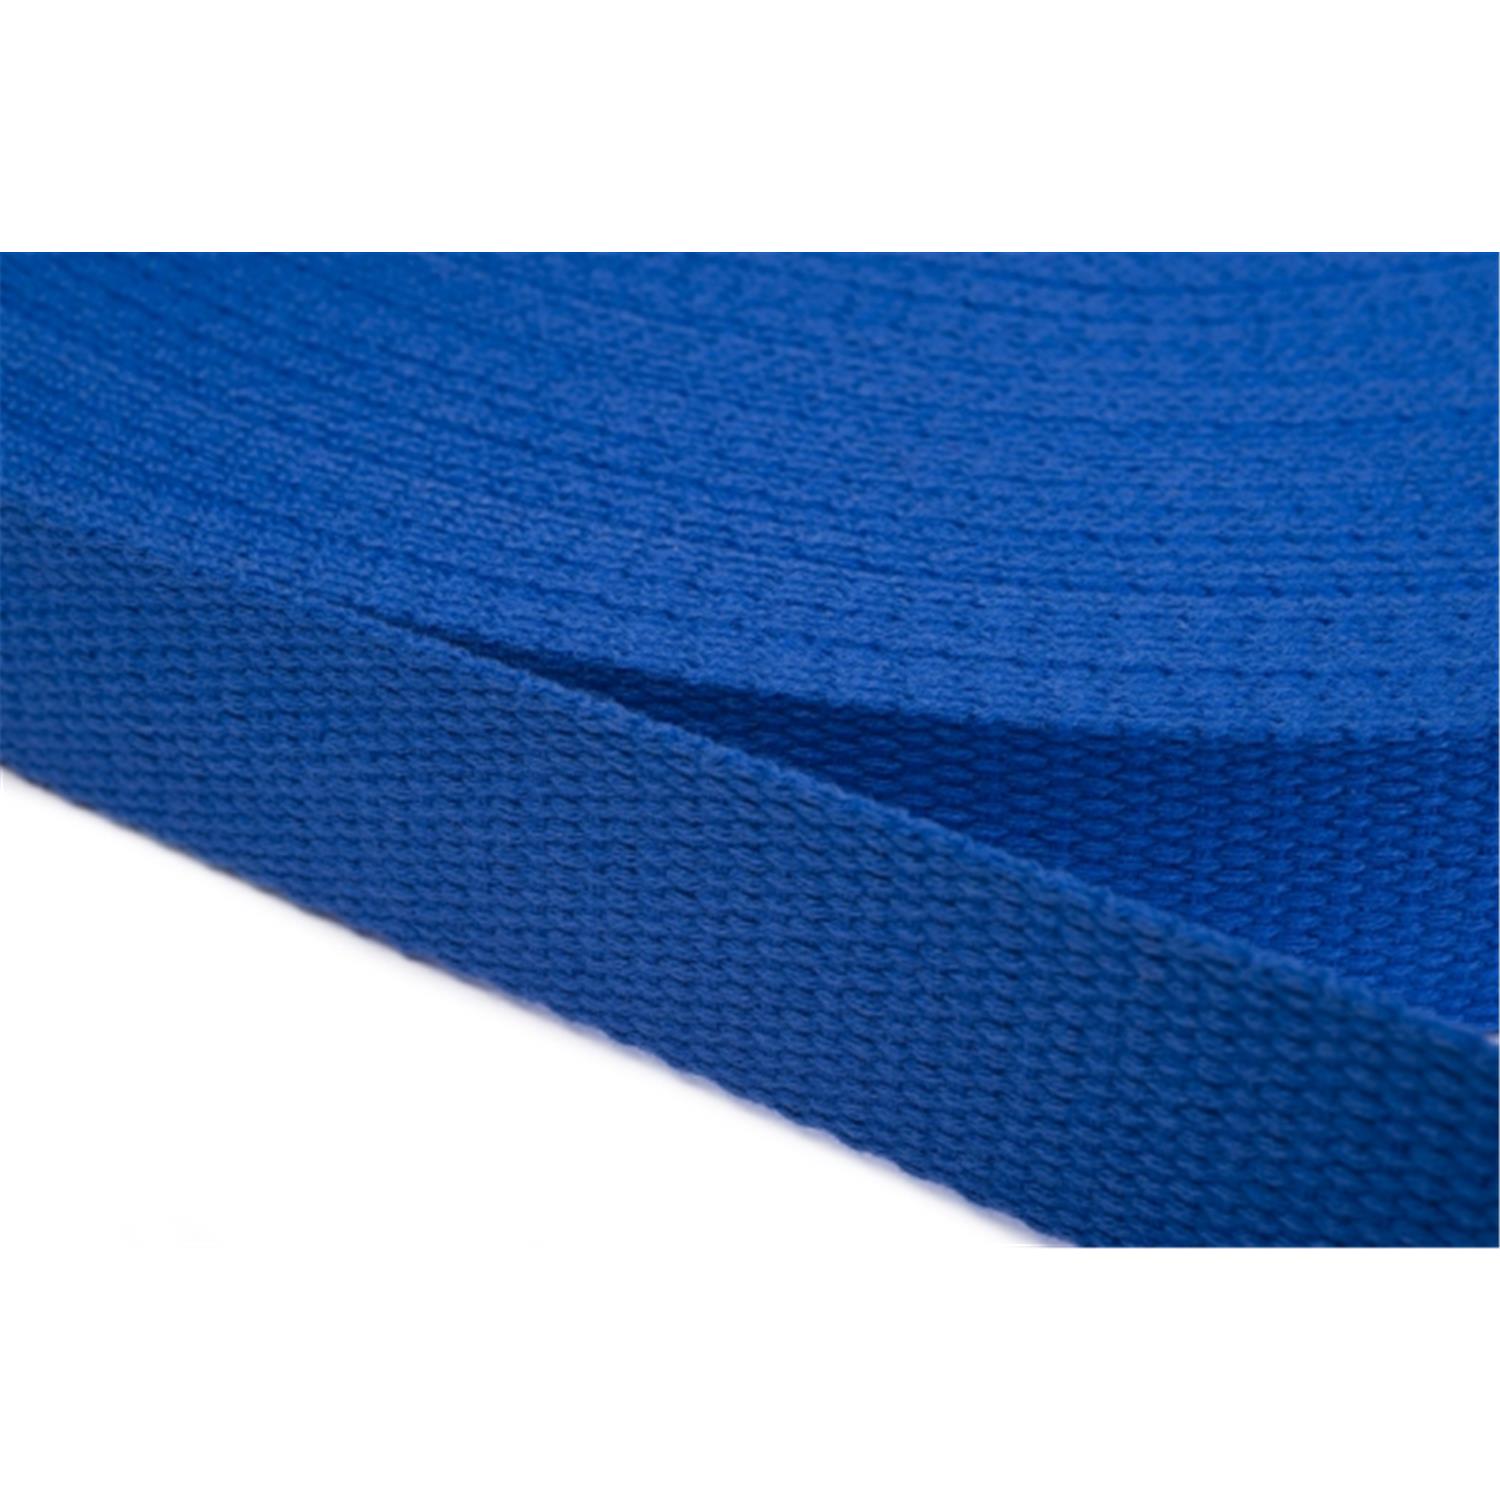 Gurtband aus Baumwolle 15mm in 20 Farben 12 - royalblau 12 Meter